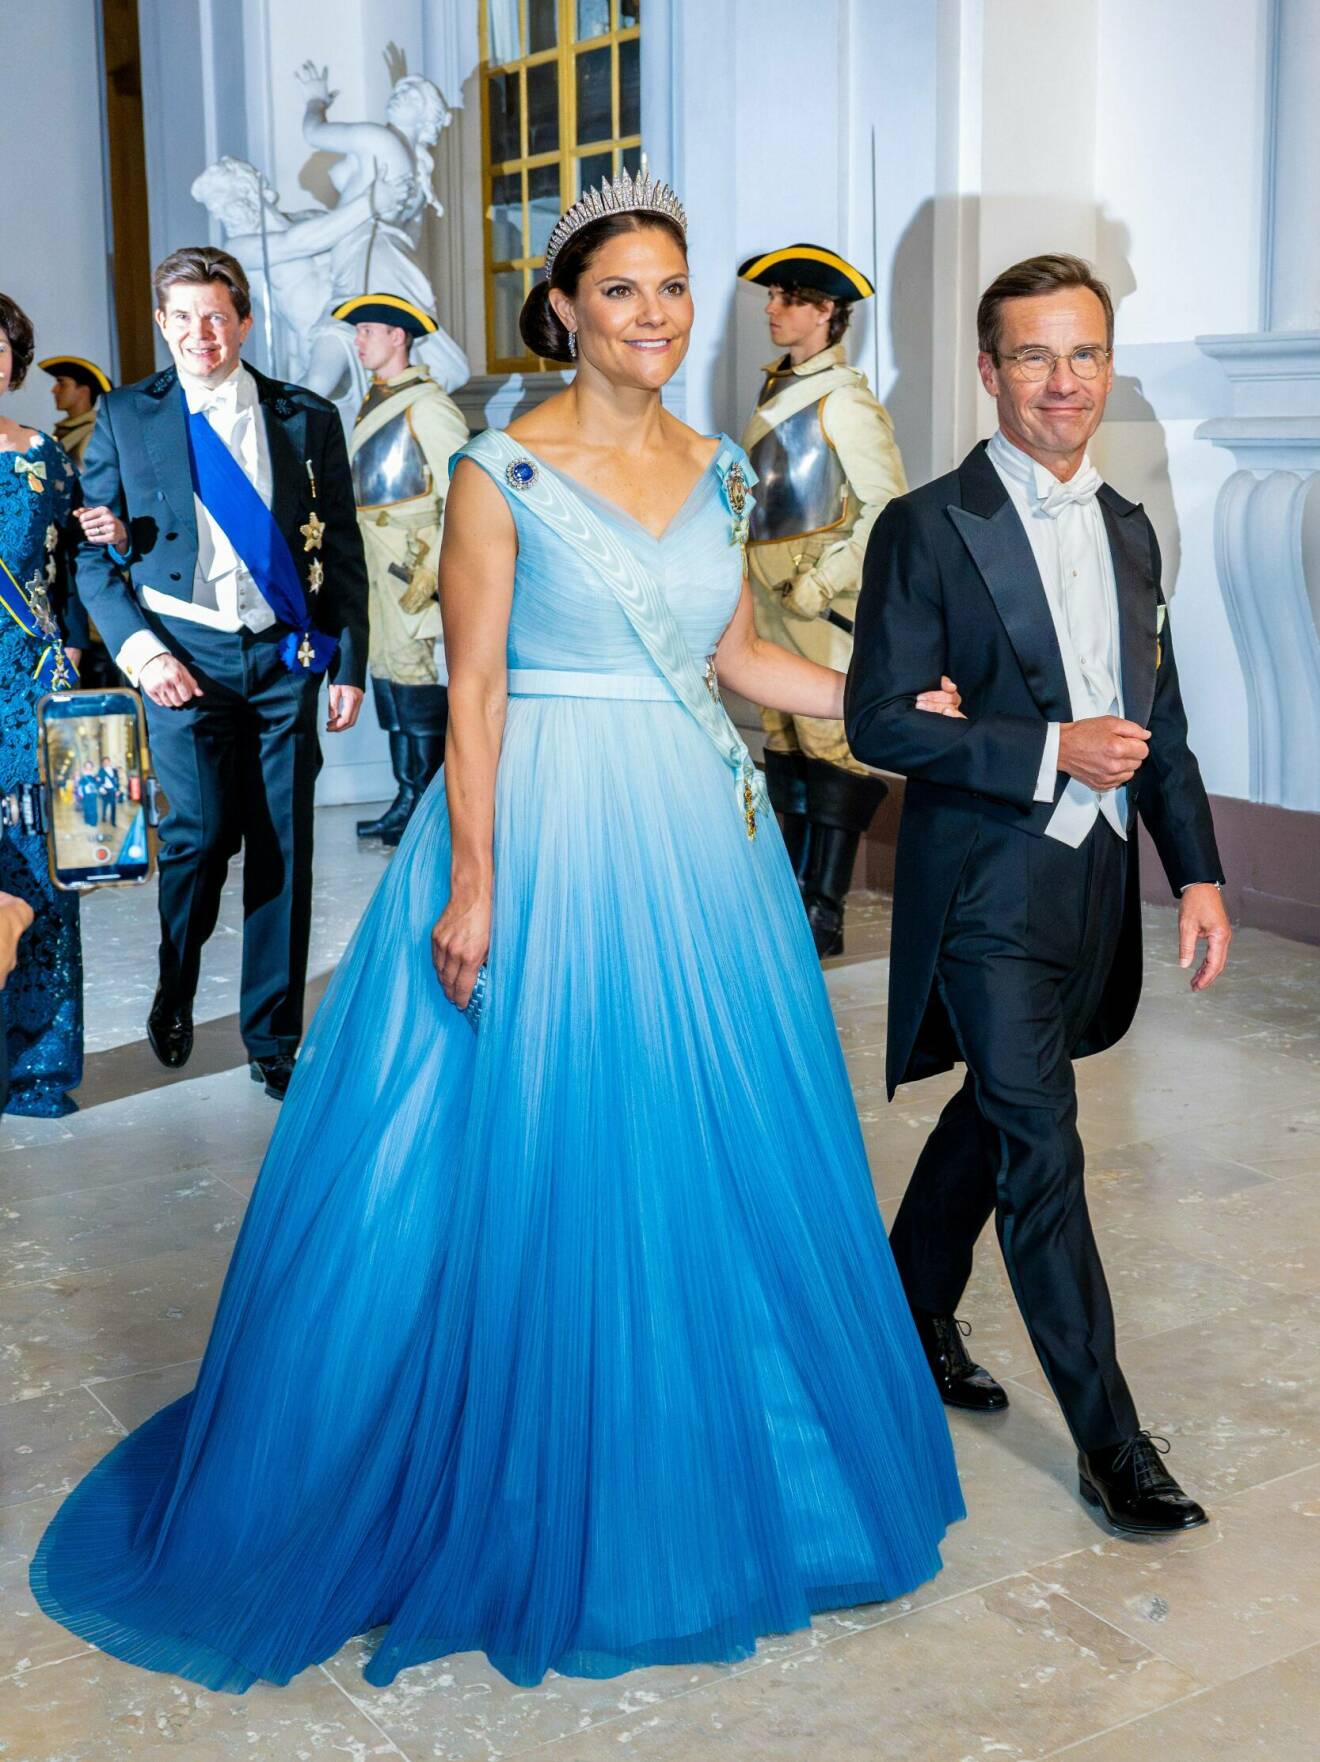 Kronprinsessan på middag på Stockholms slott – kungen 50 år på tronen